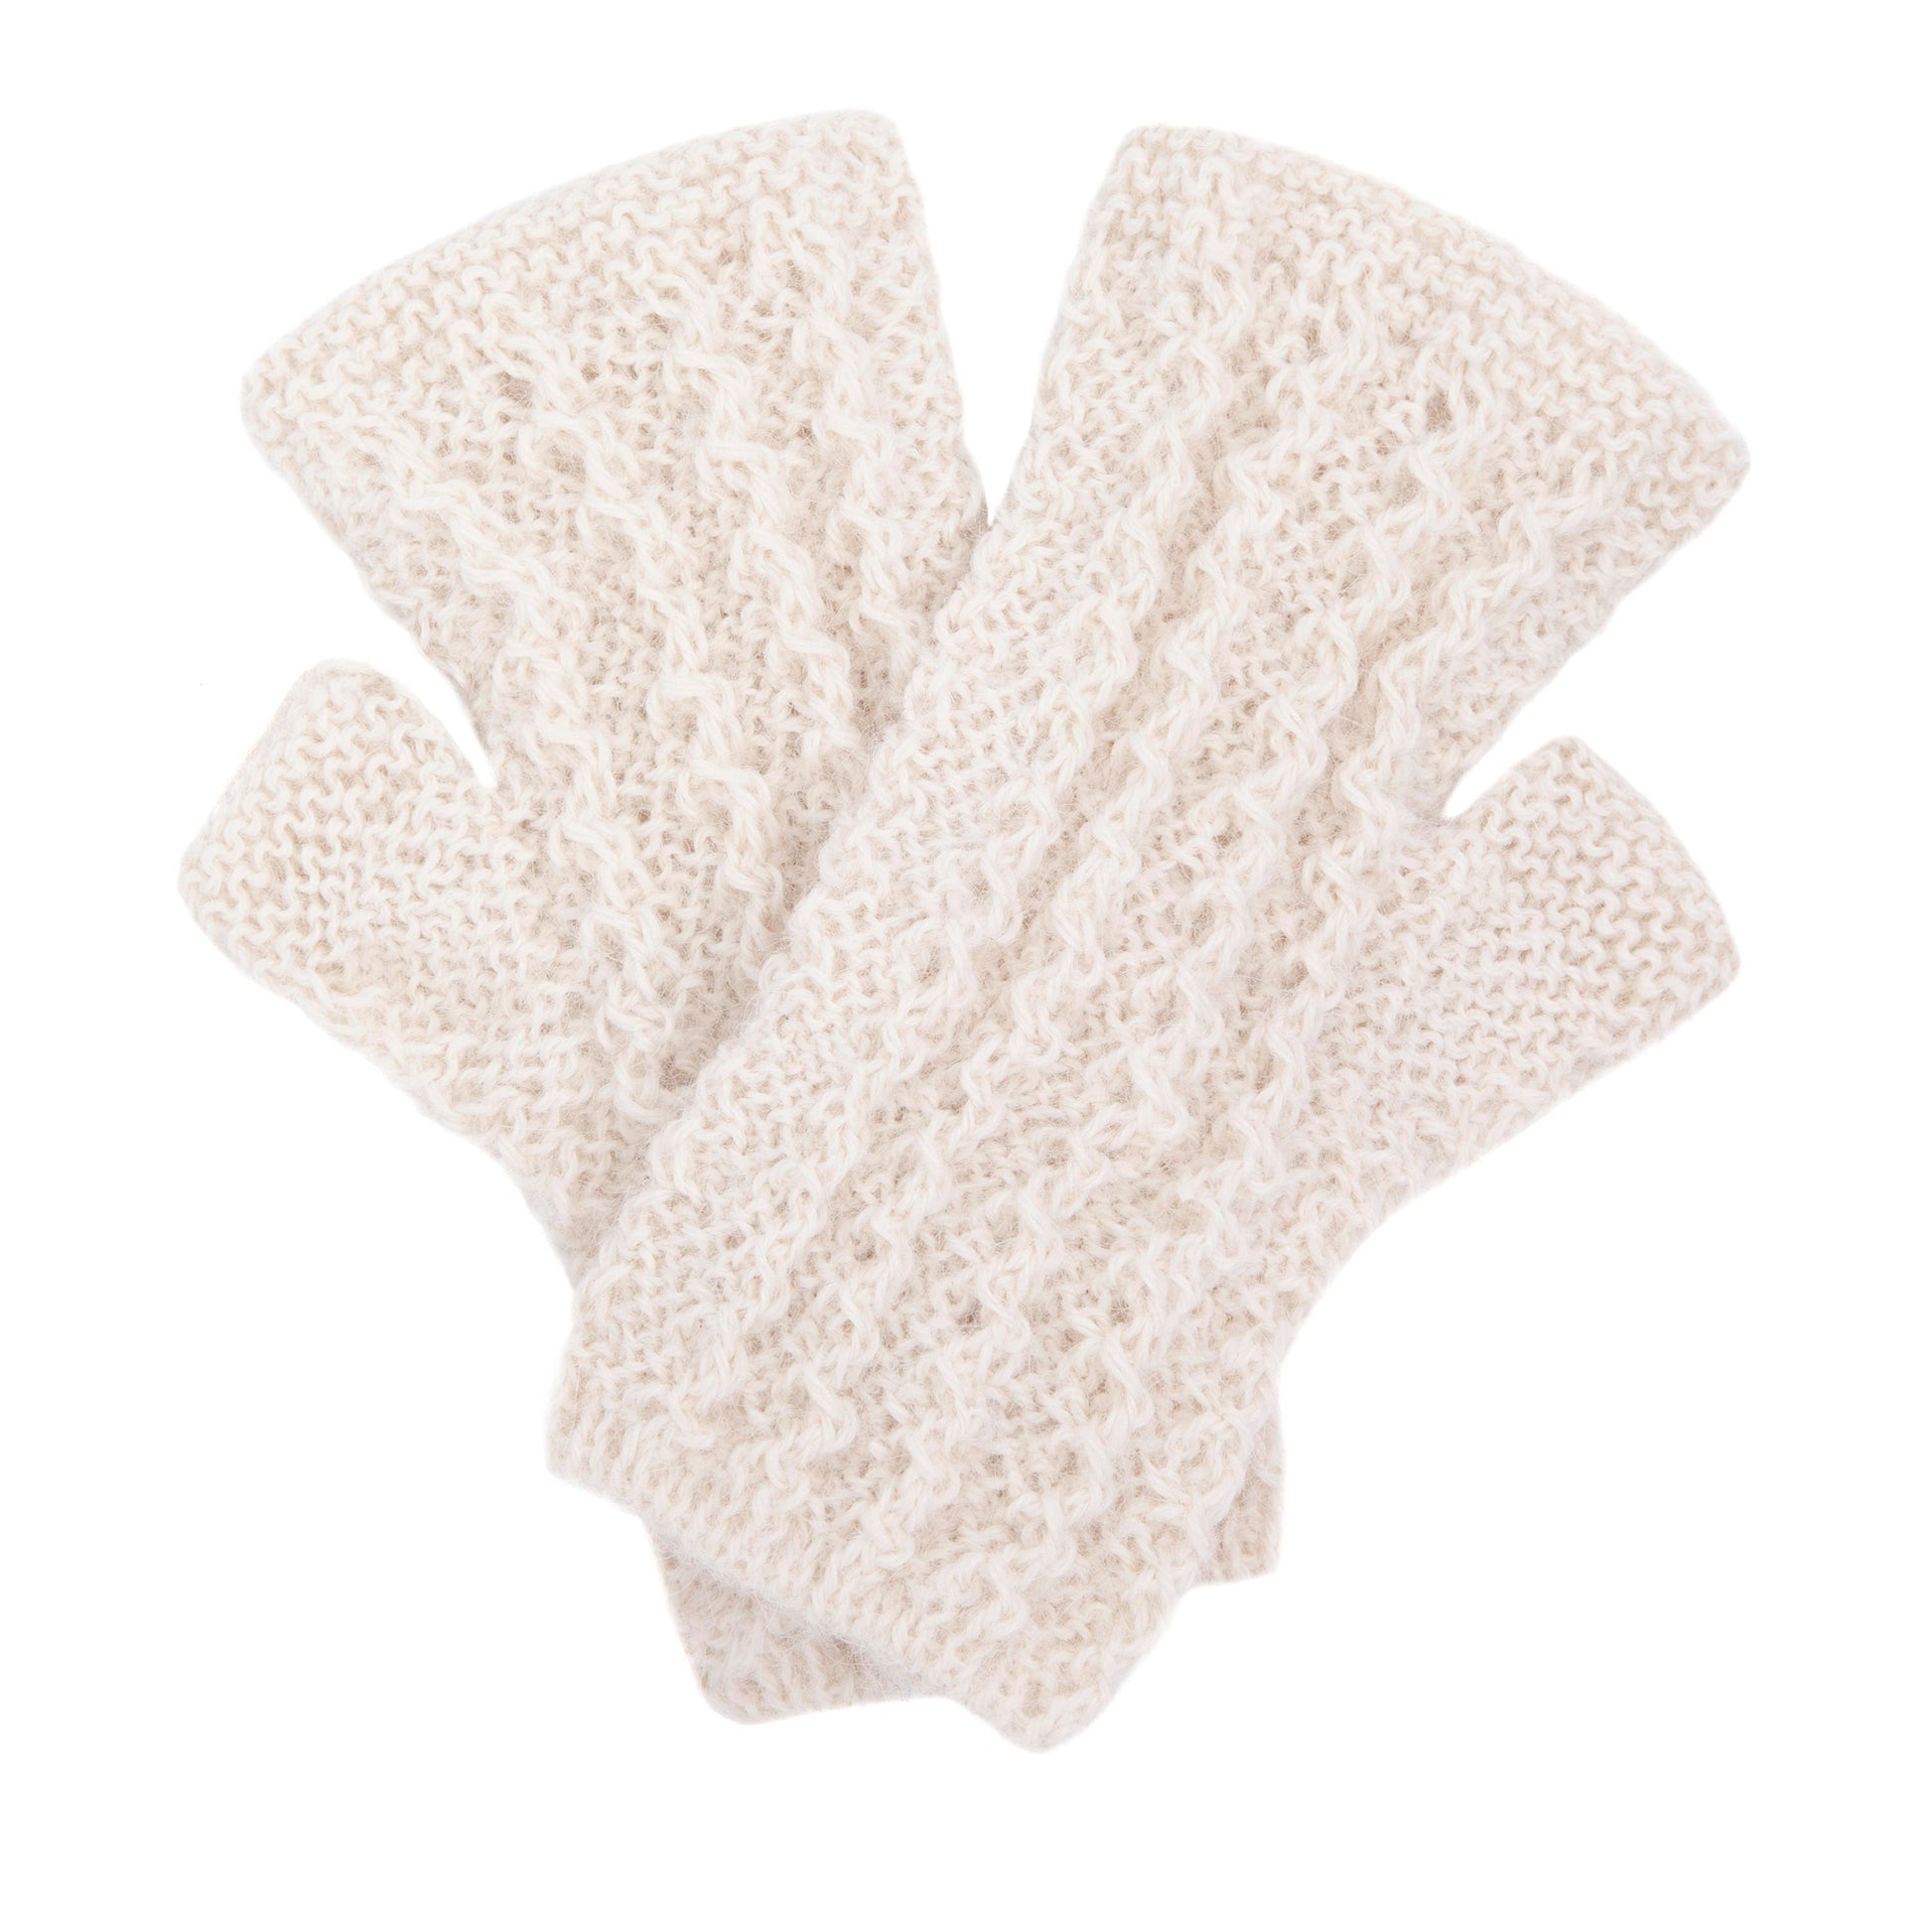 100% Alpaca Fingerless Mittens, Gloves, Wristwarmers, Hand knitted, Soft, Warm, Ethical, Fair Trade gift